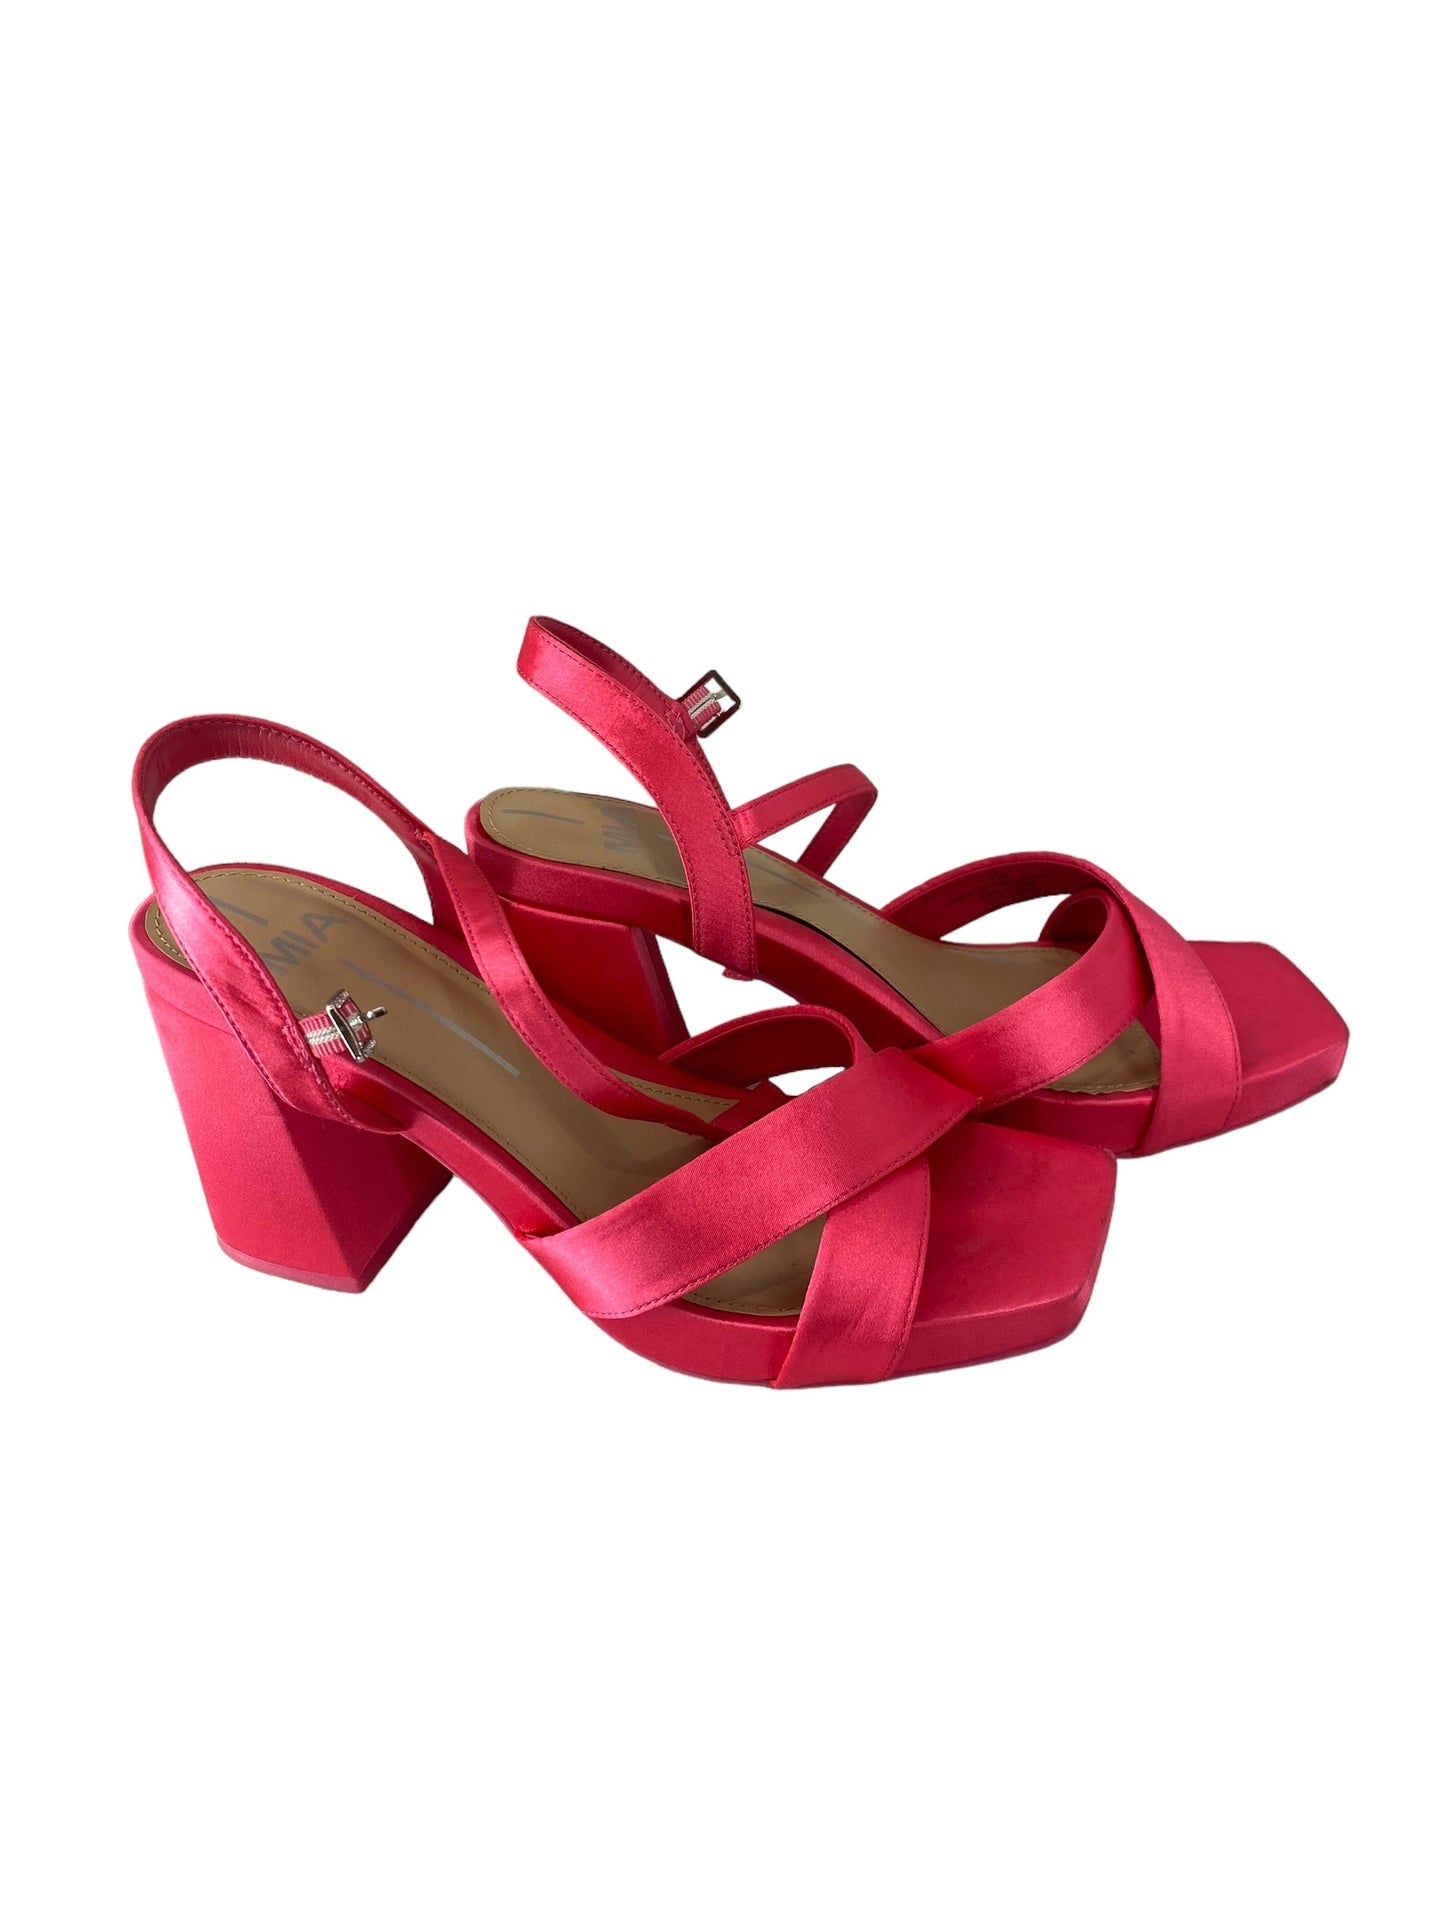 Pink Shoes Heels Block Mia, Size 8.5